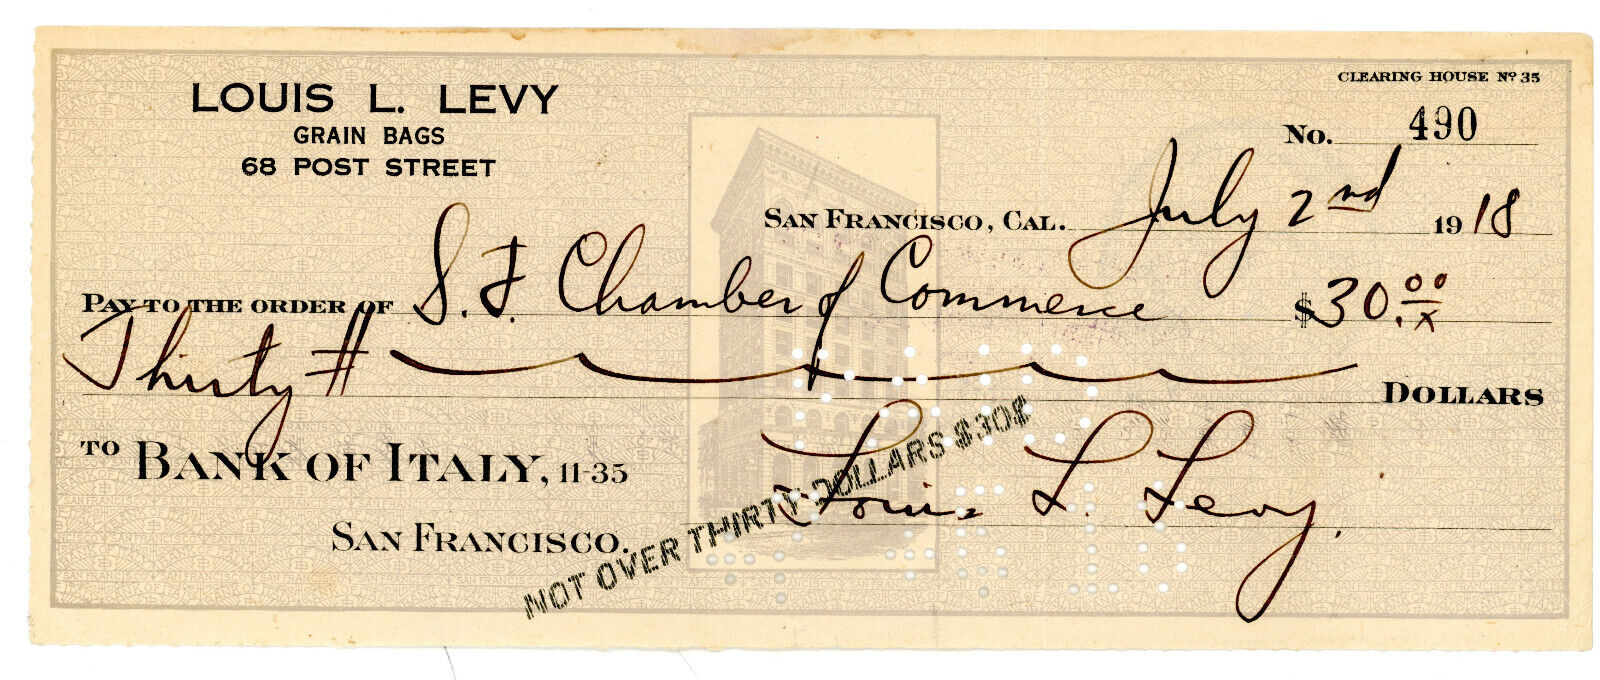 July 2, 1918 Bank of Italy, San Francisco Check, Later Named BANK OF AMERICA